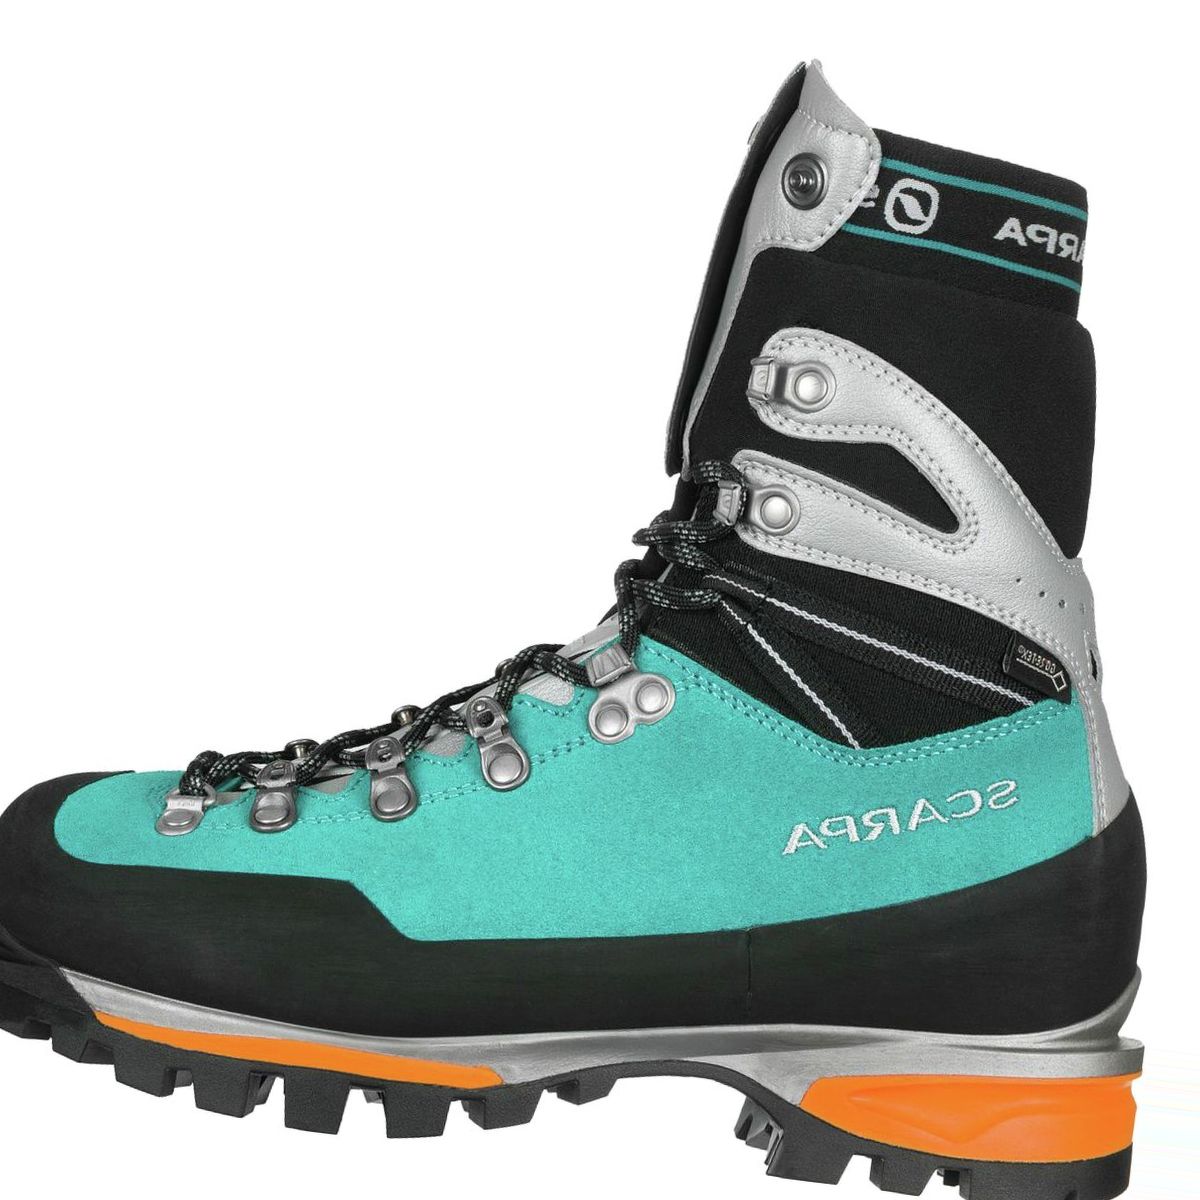 Scarpa Mont Blanc Pro GTX Mountaineering Boot - Women's